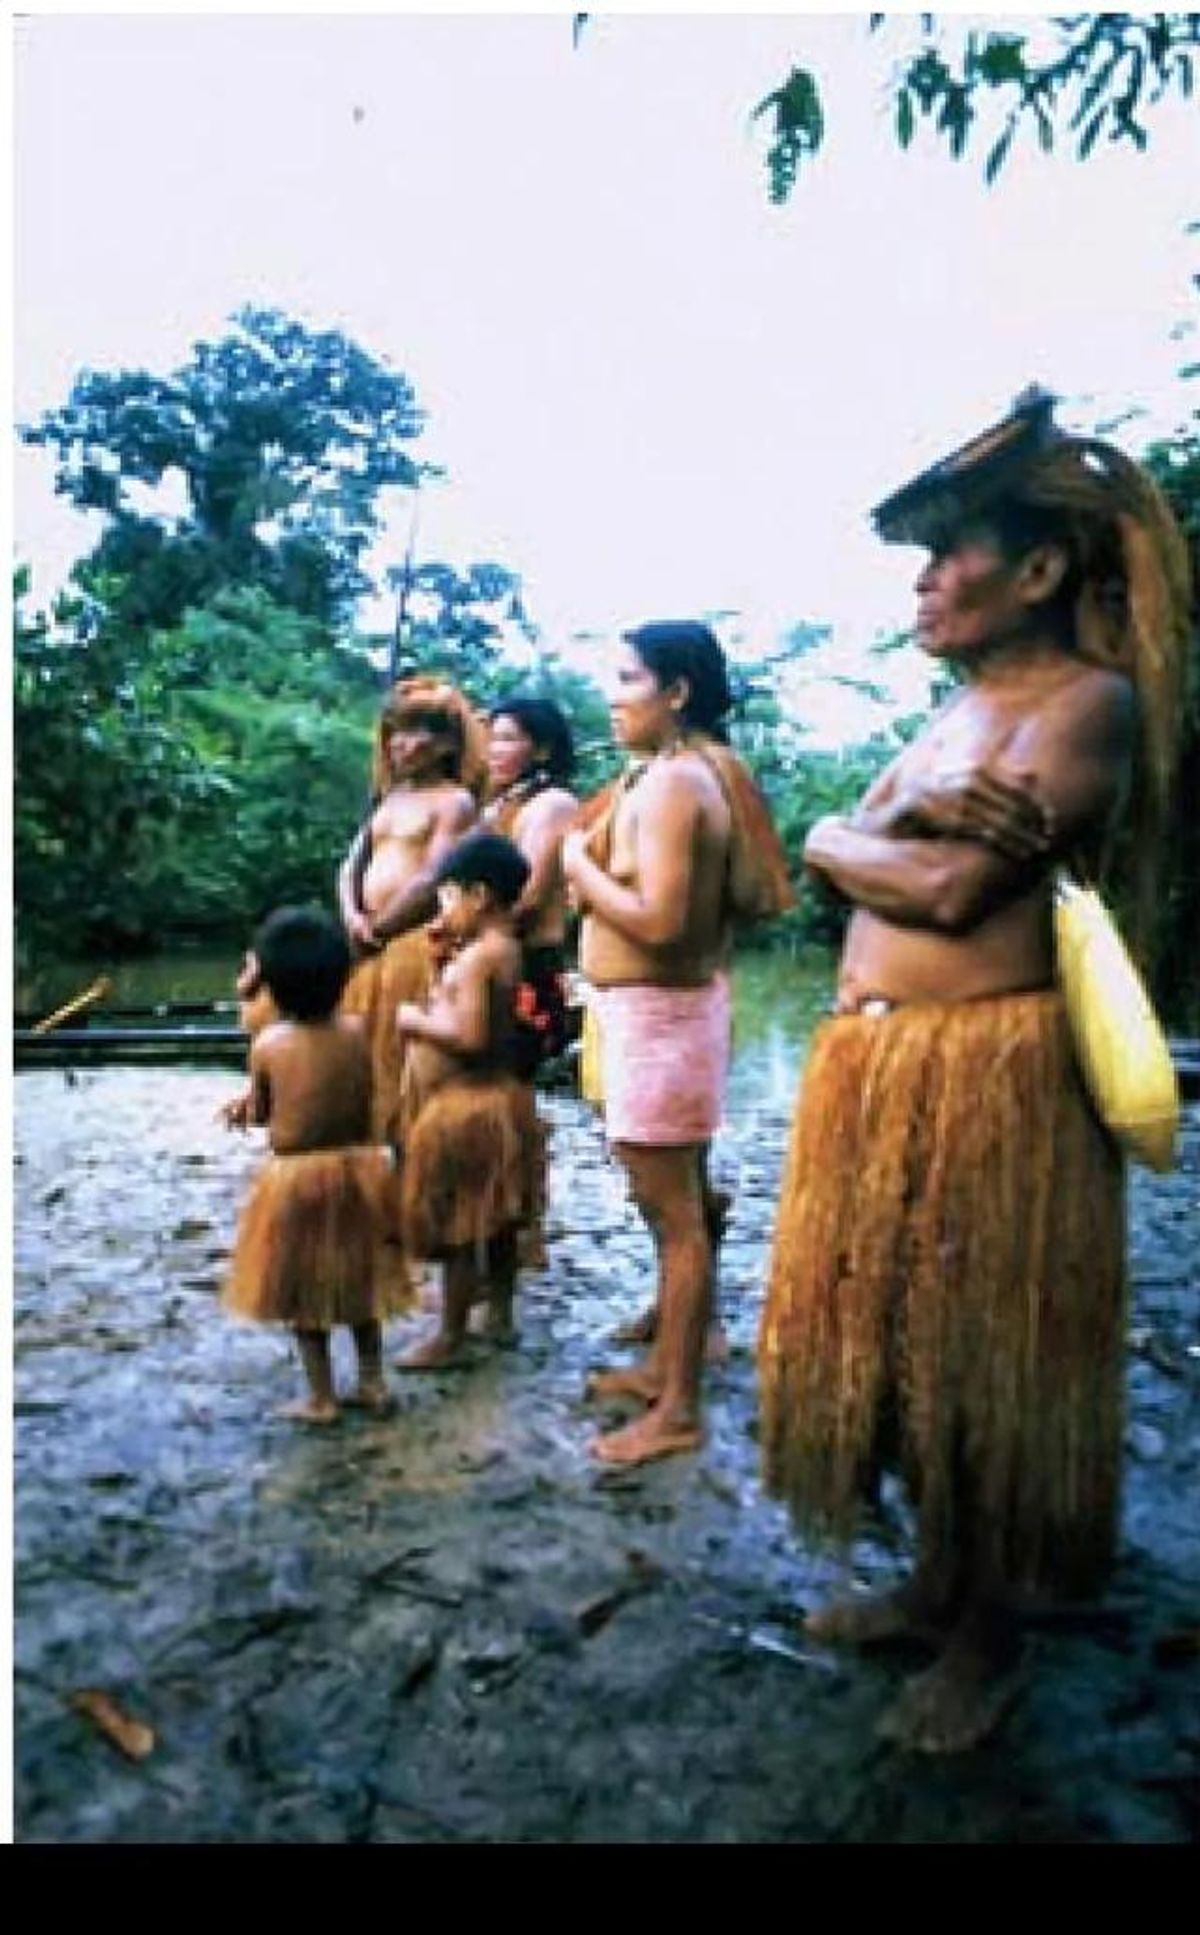 Indigenous People of the Amazon